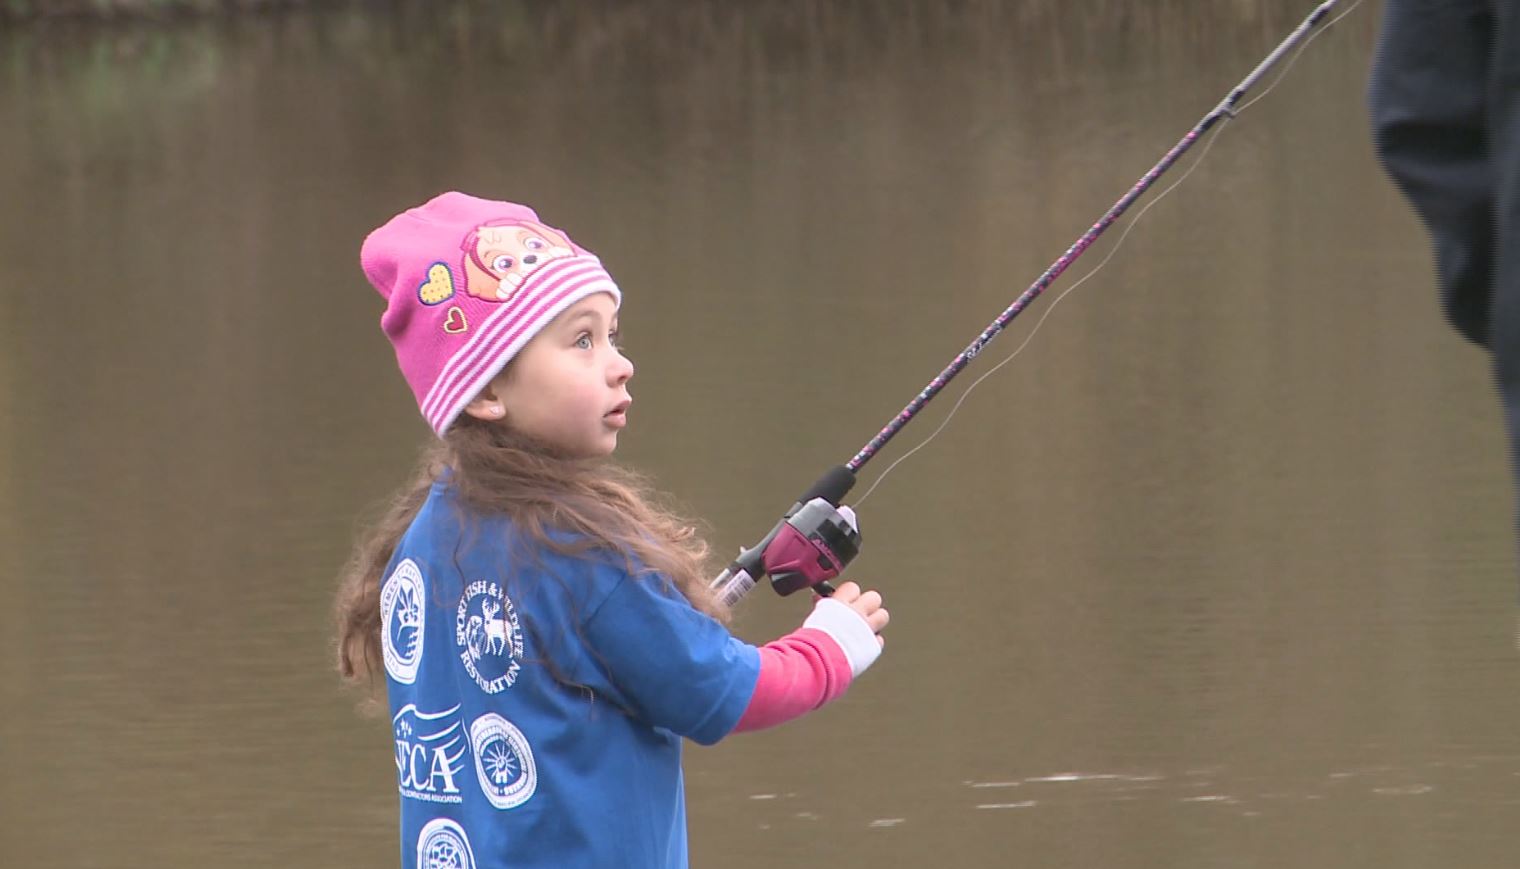 Take Kids Fishing Day' gives away free fishing gear to build love